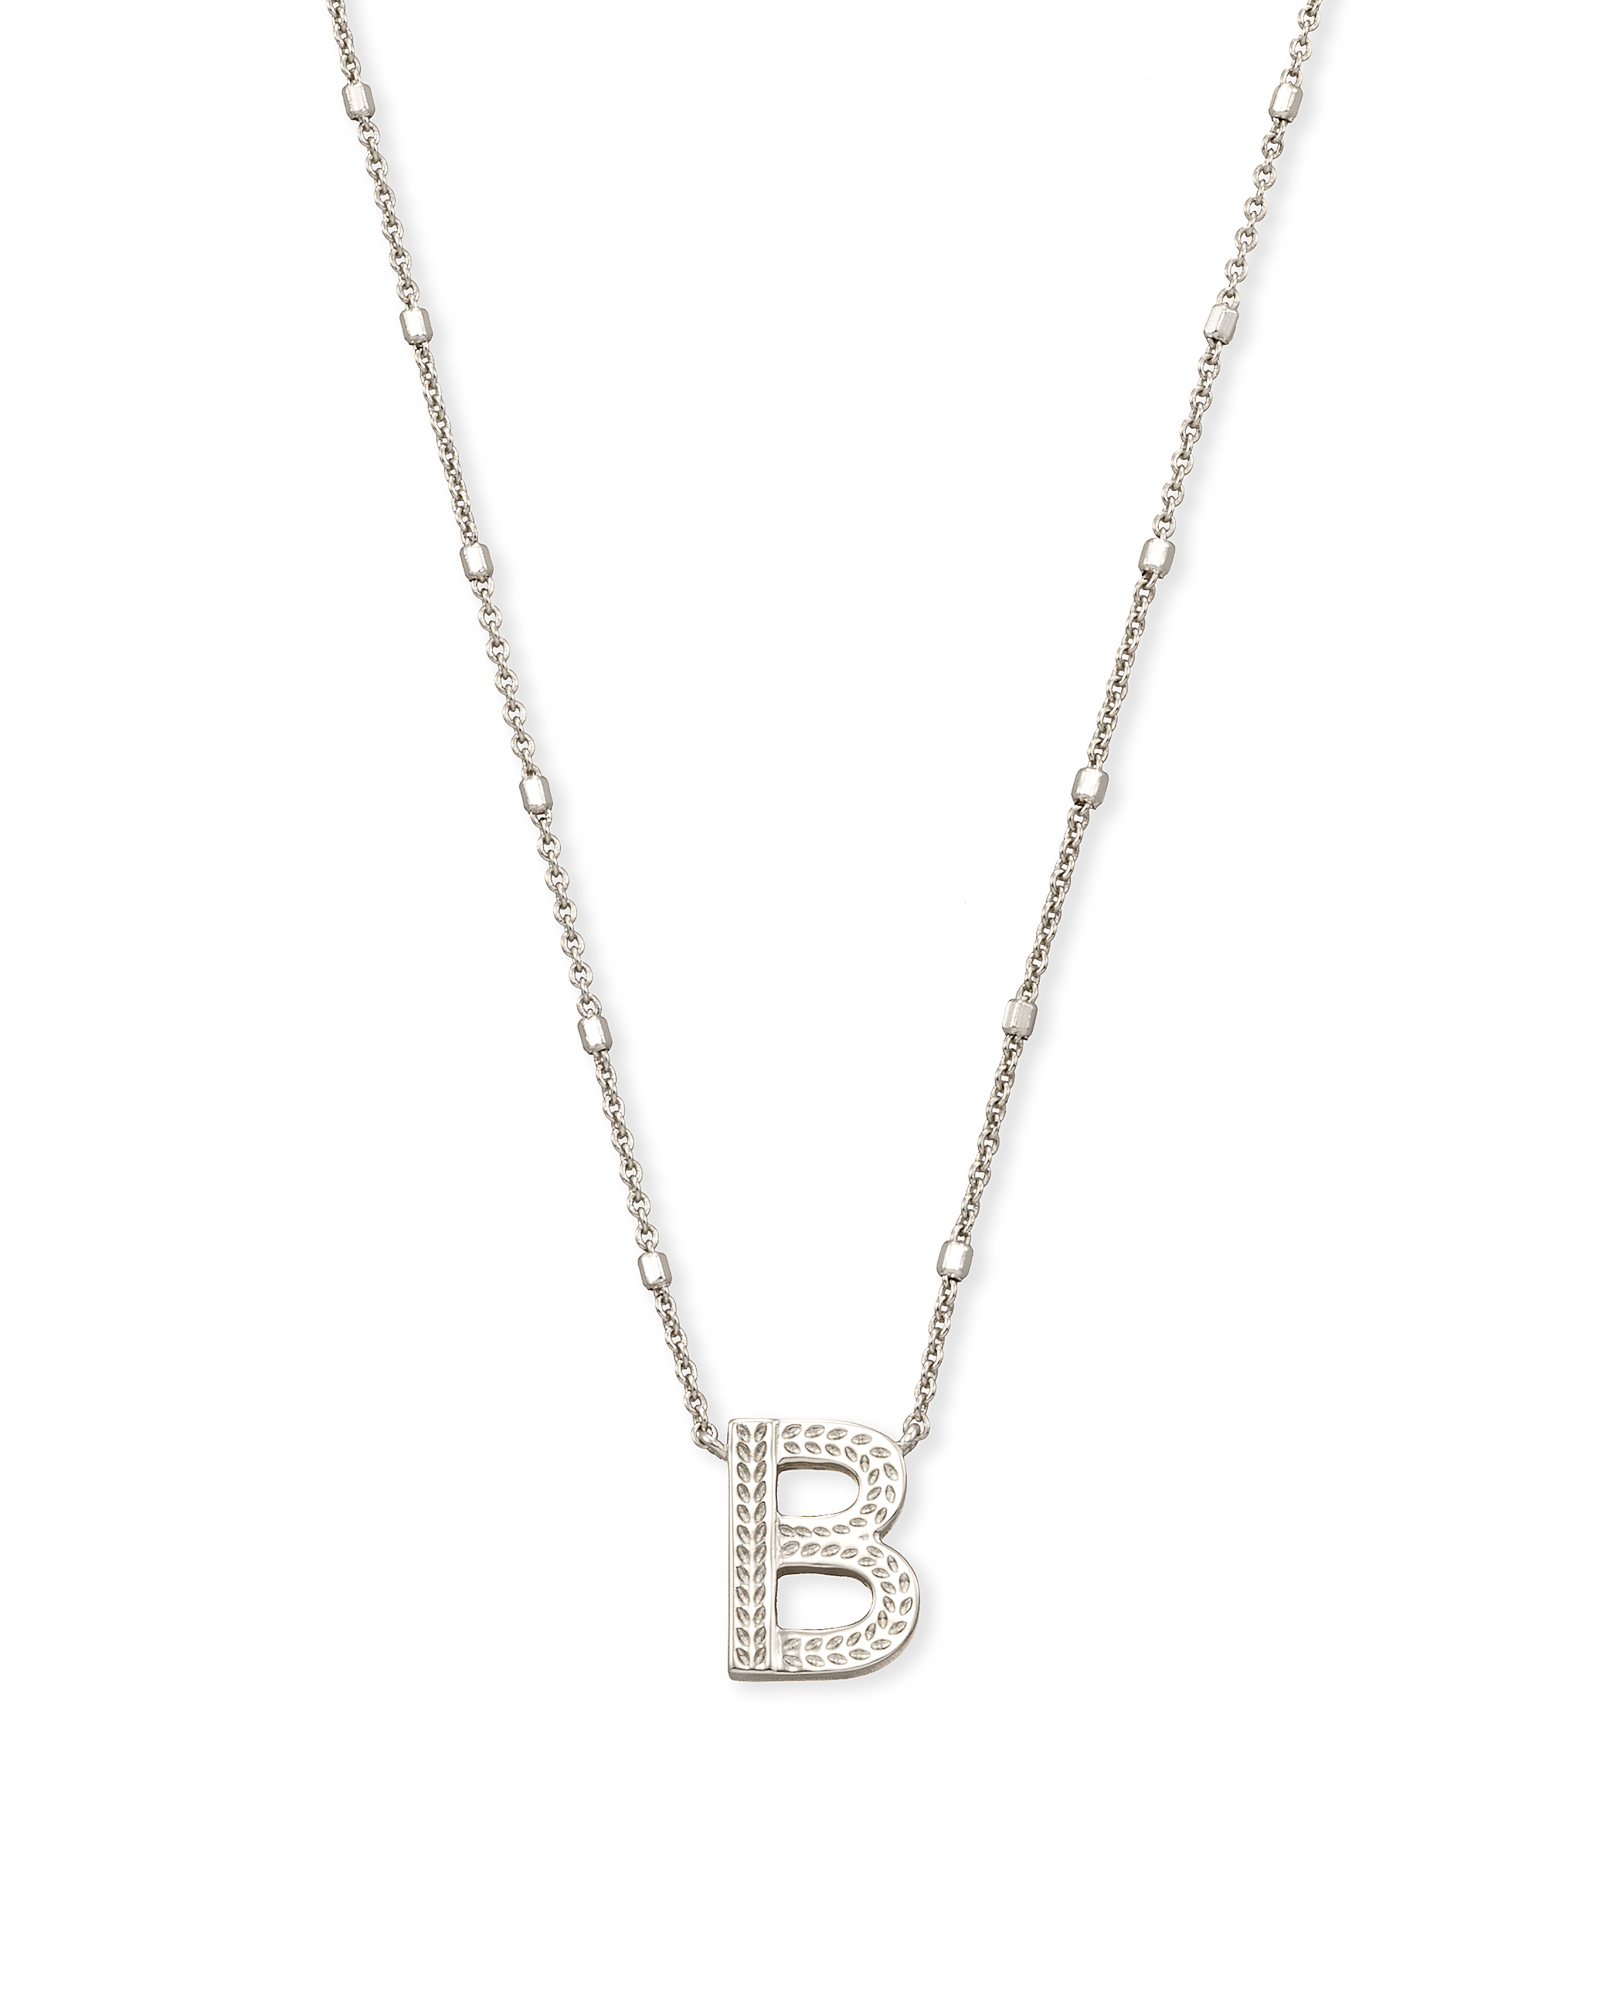 14K Solid Gold 3D Letter B Necklace